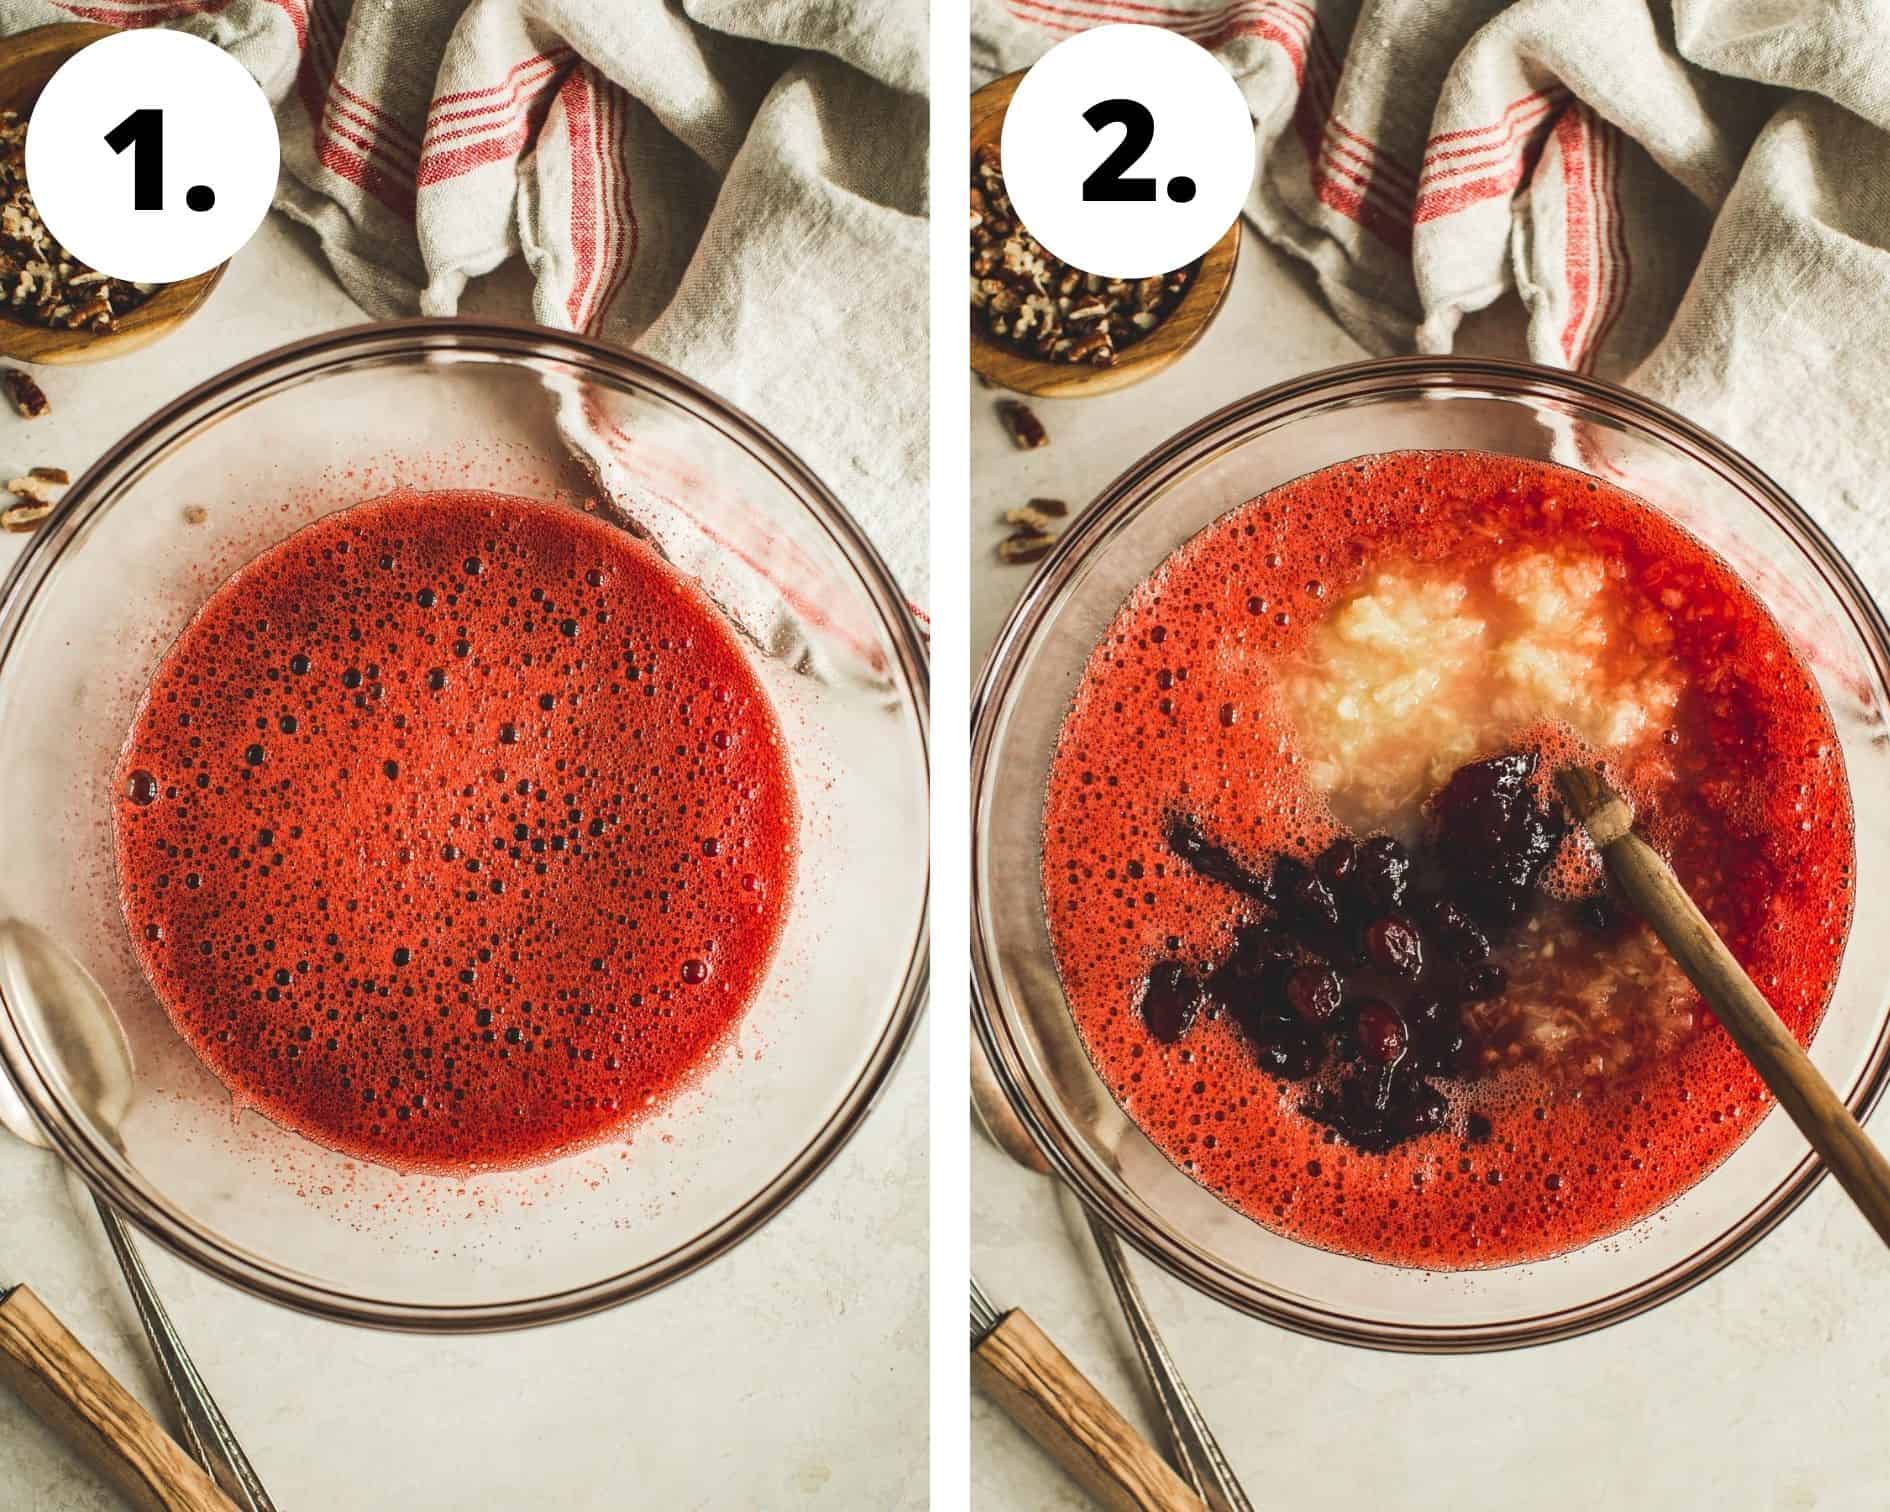 Cranberry gelatin salad process steps 1 and 2.